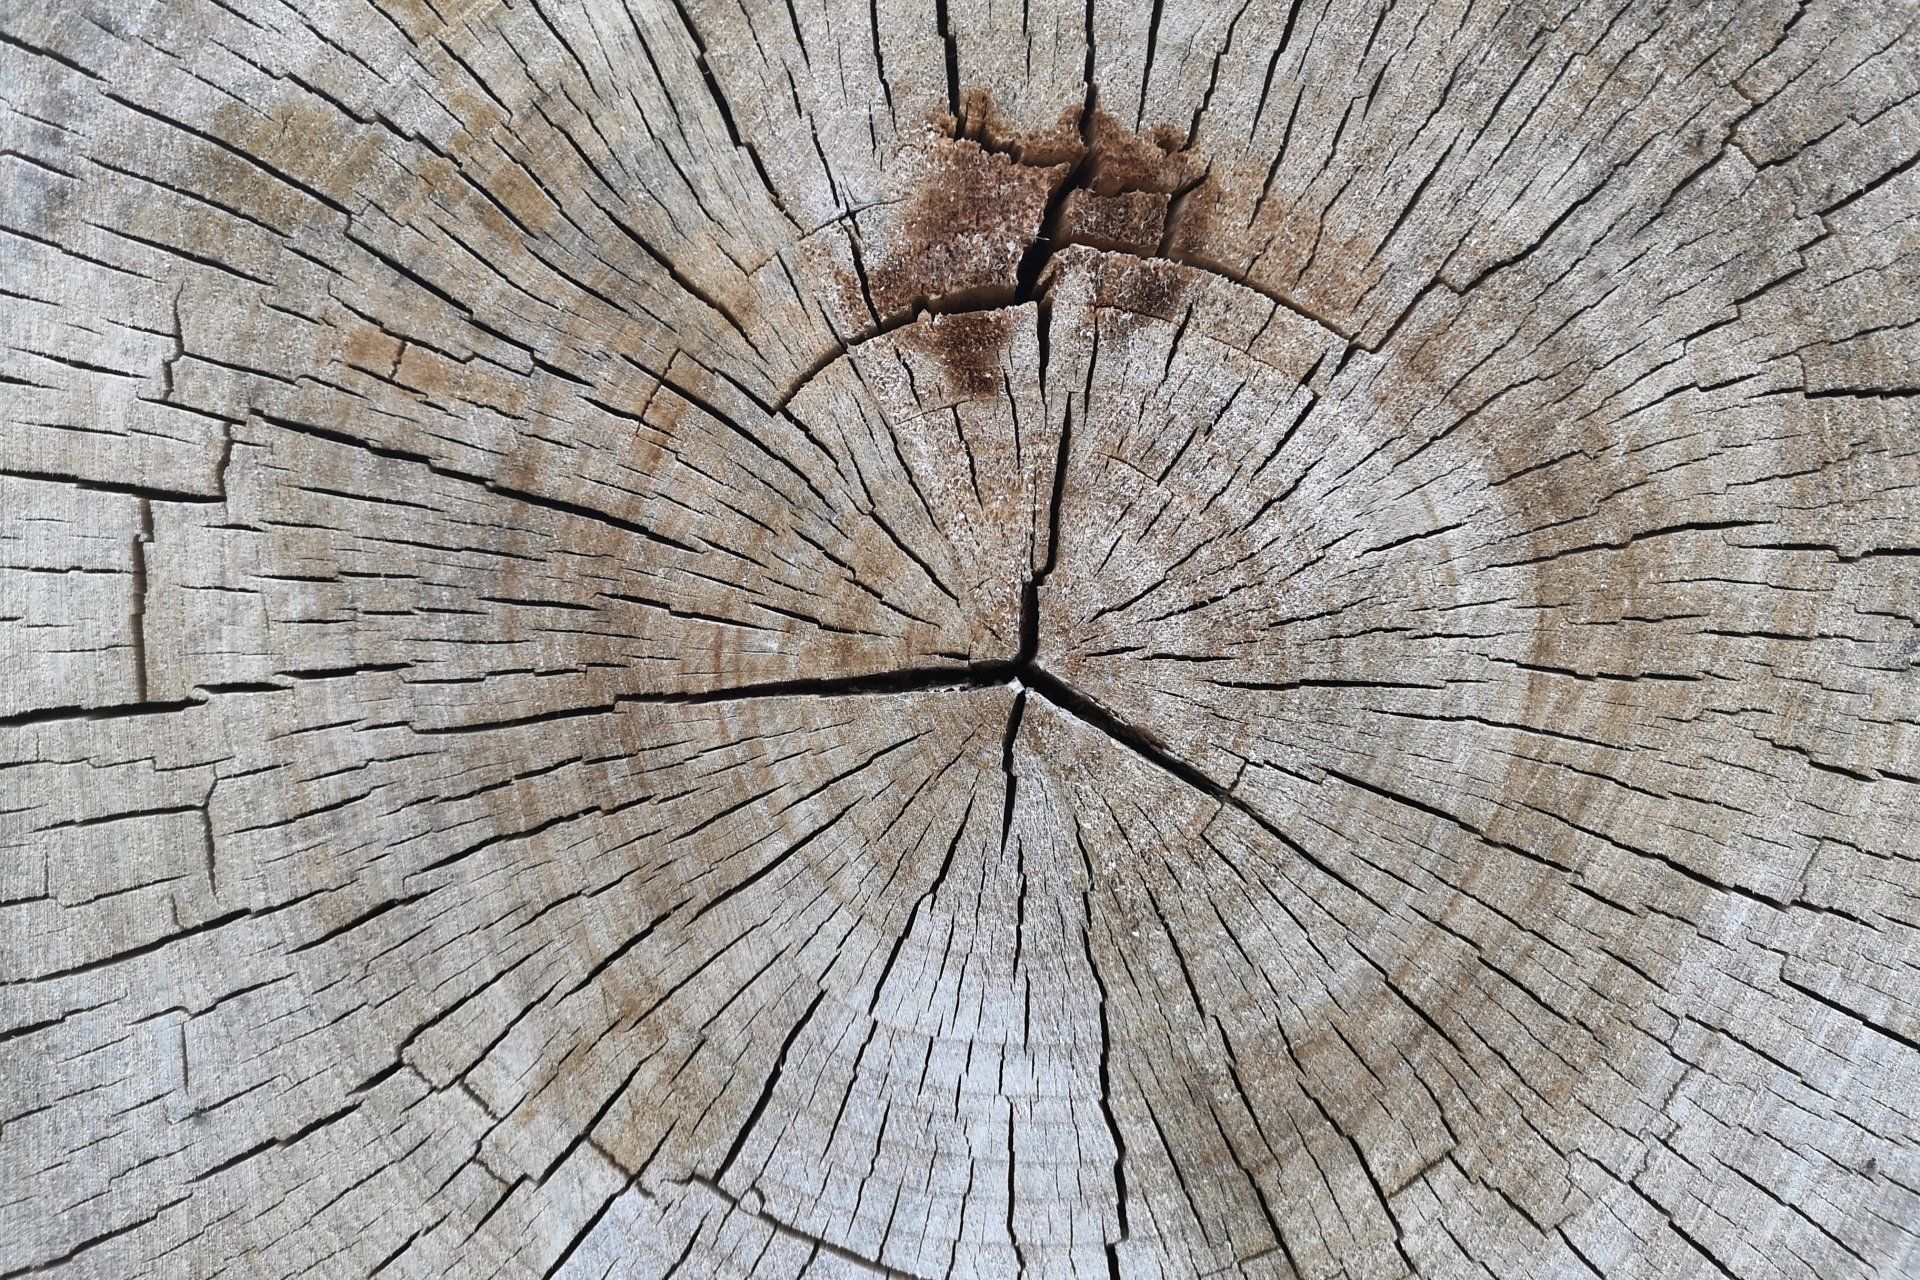 Heart of a tree stump